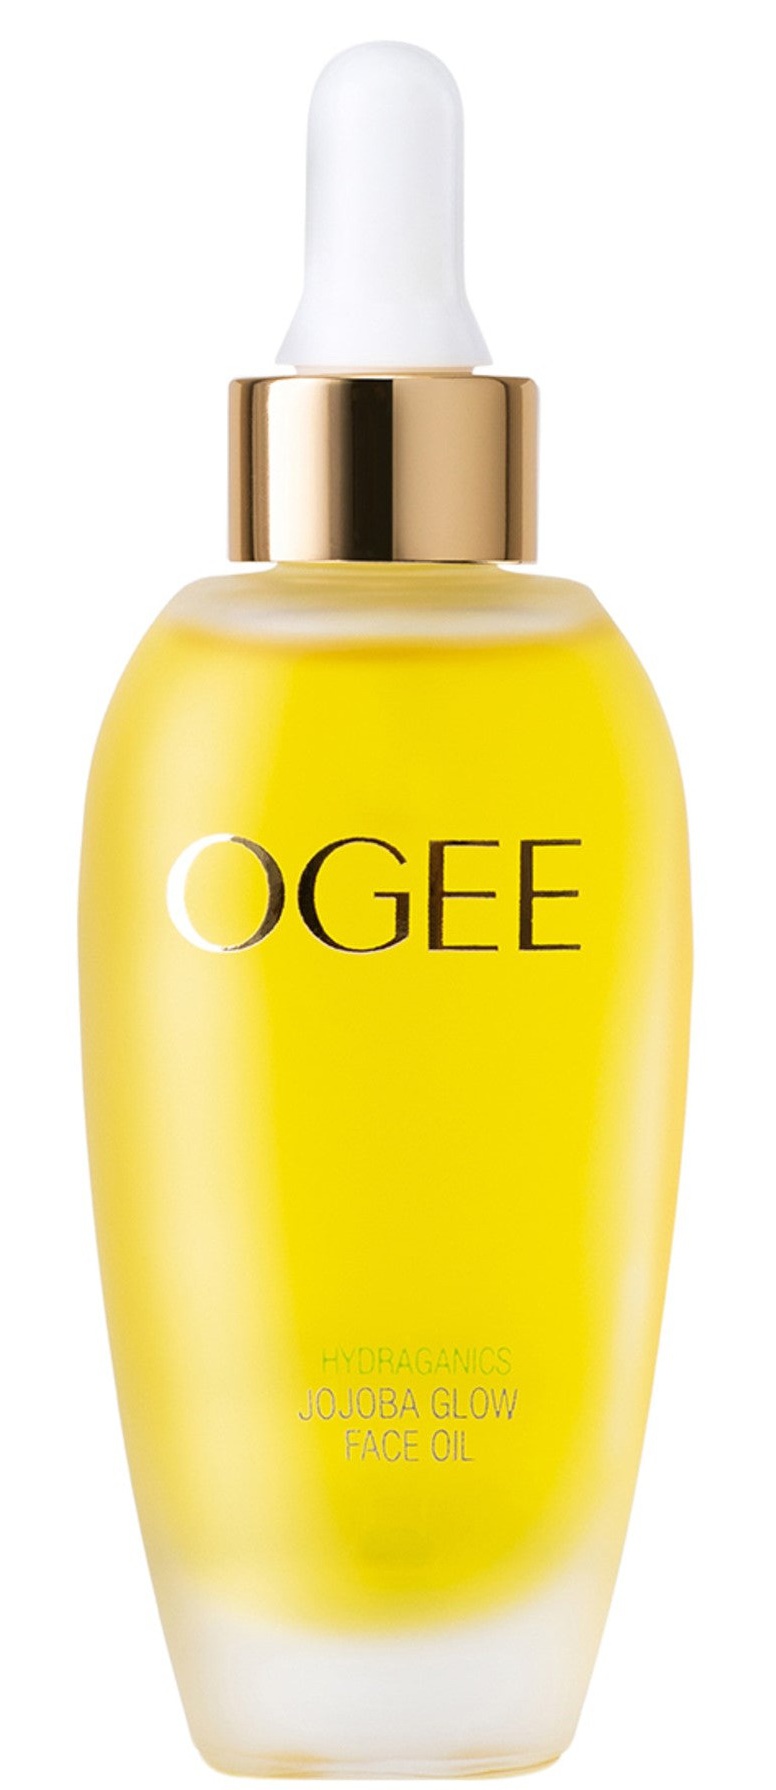 Ogee Jojoba Glow Face Oil